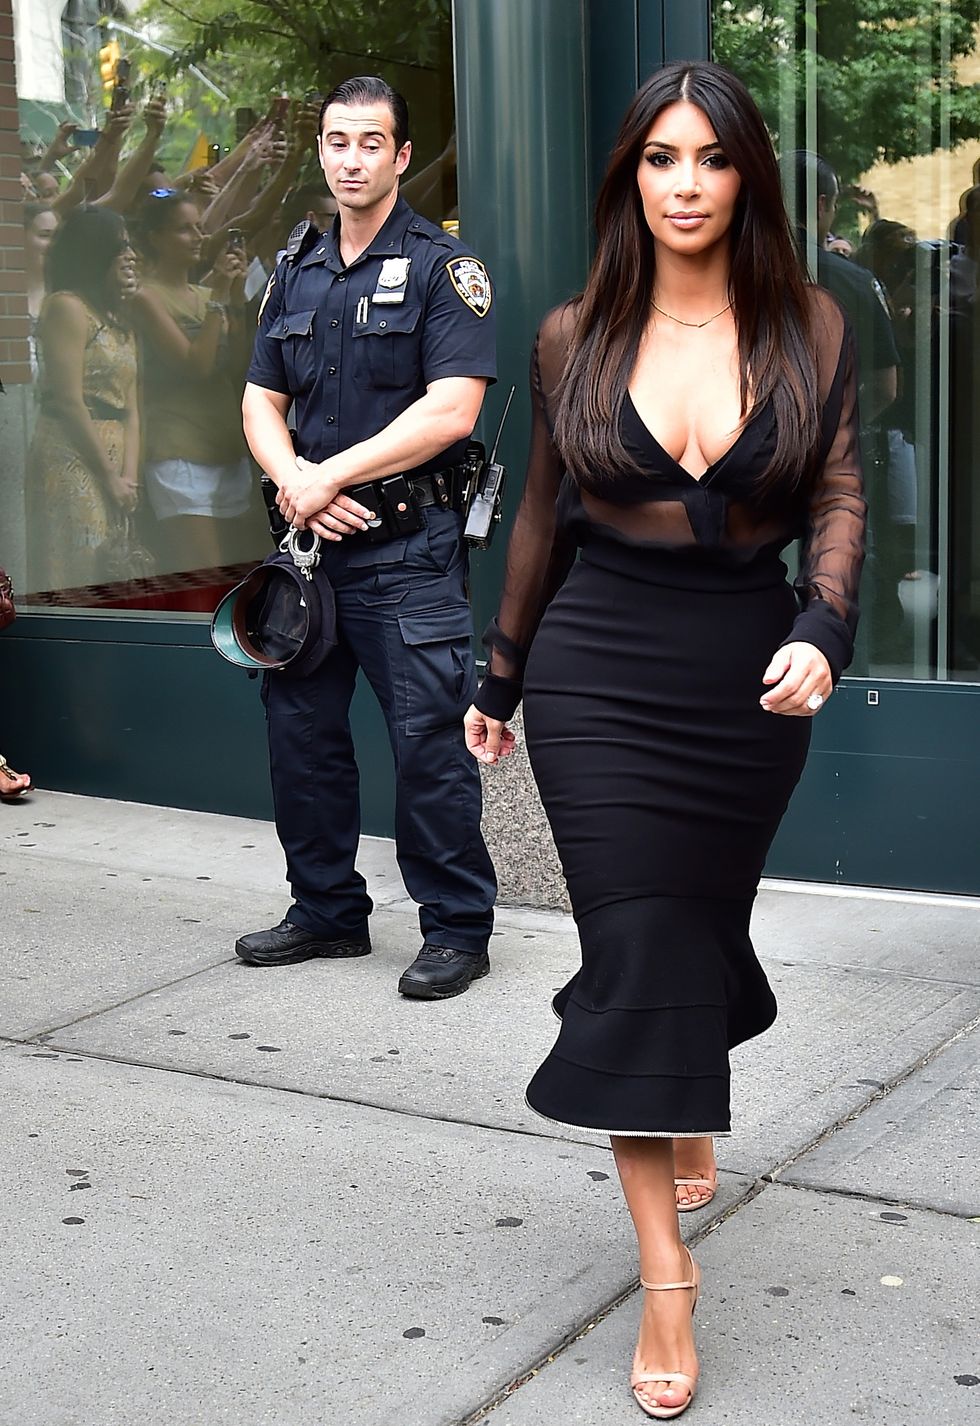 Kim Kadashian wows in low-cut, sheer black dress - celebrity style photos - fashion - cosmopolitan.co.uk